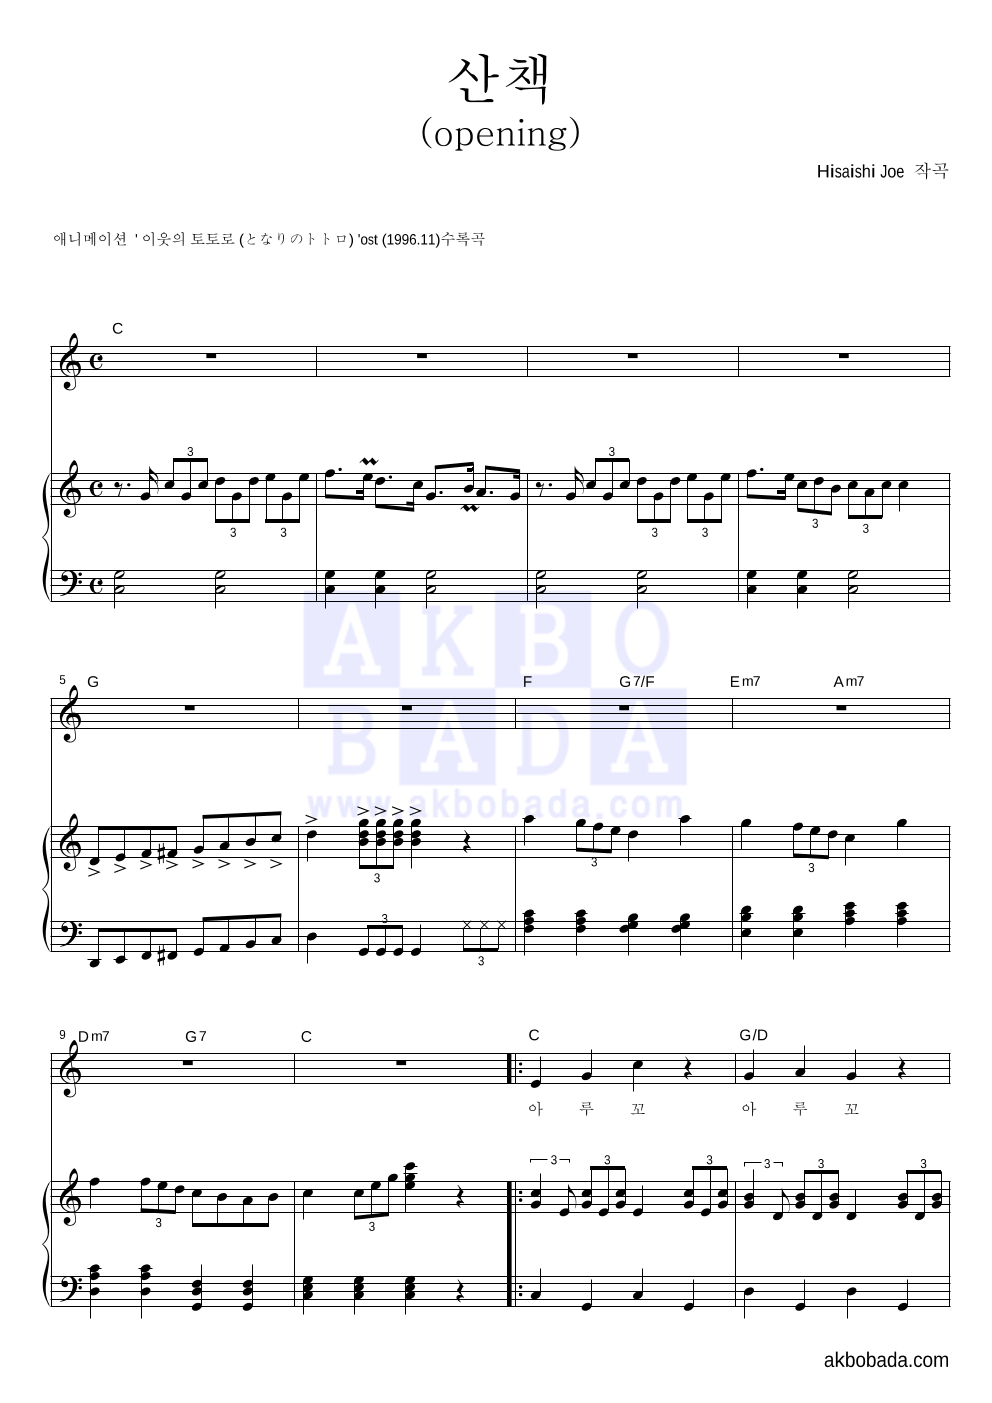 Hisaishi Joe - 산책 (Opening) 피아노 3단 악보 